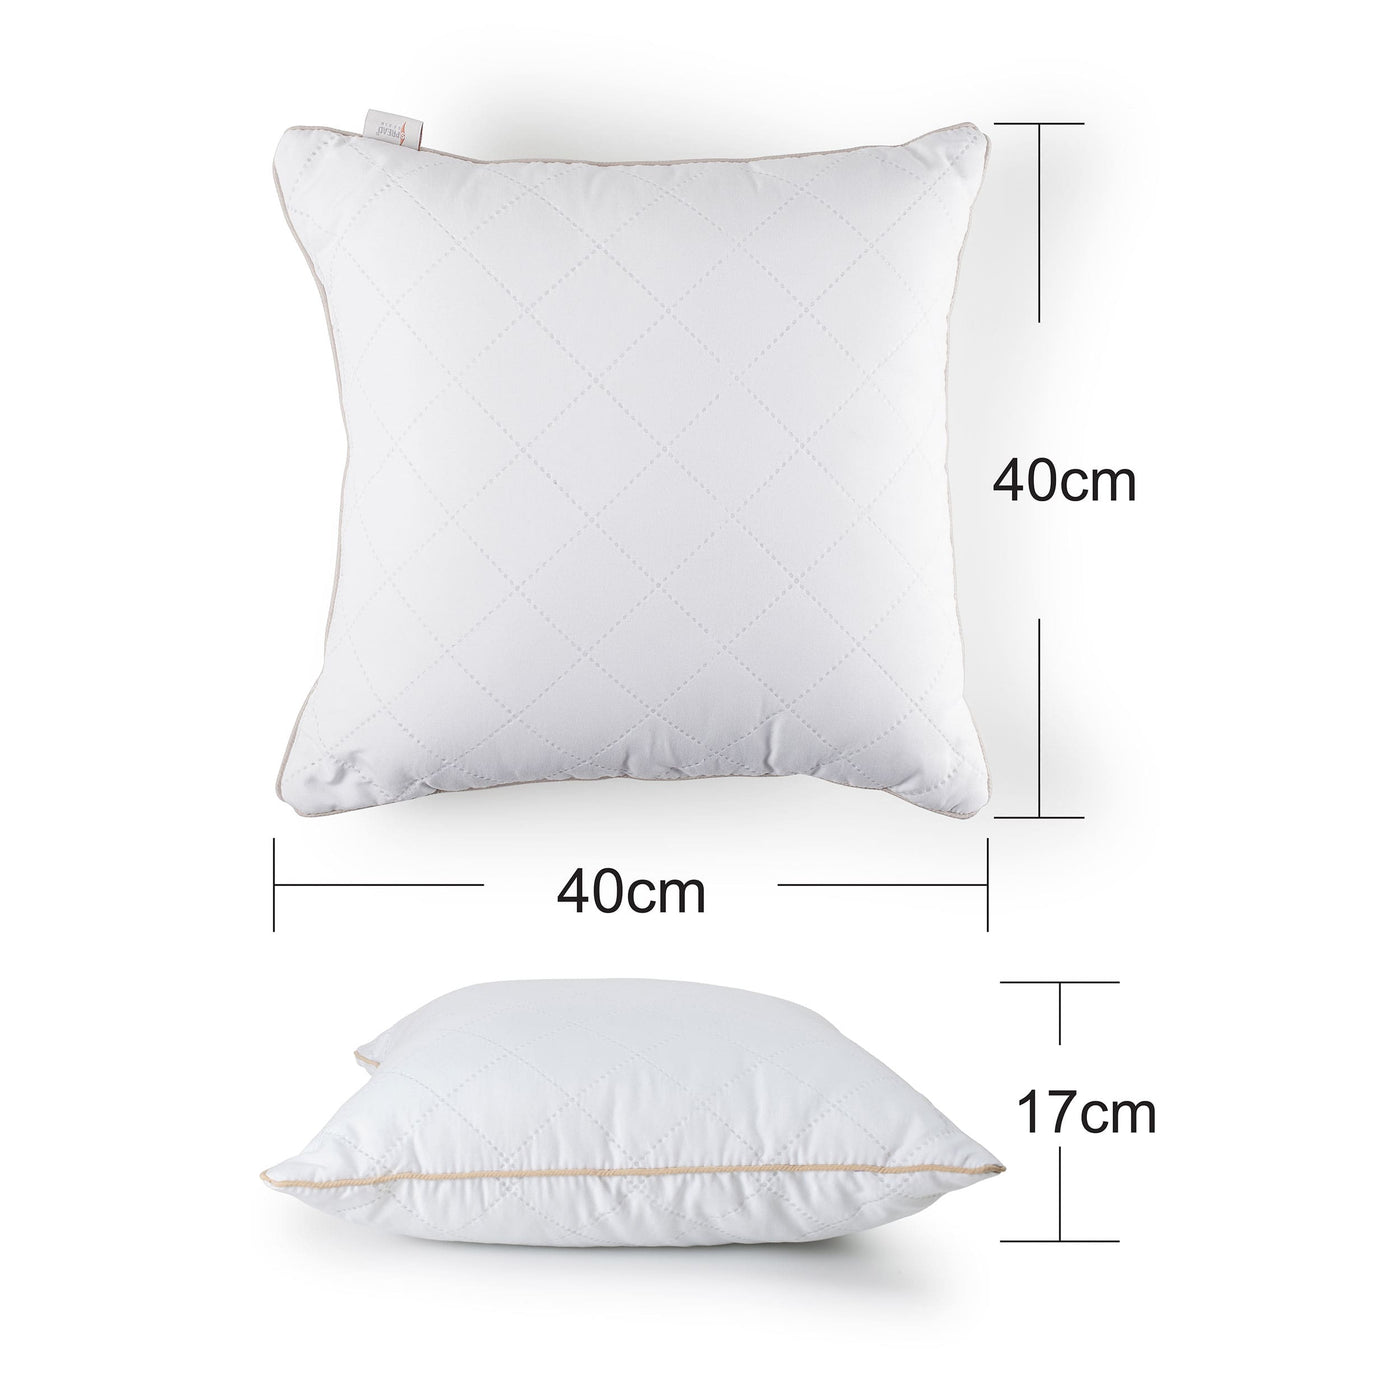 Medium Firm Cushion 40cm x 40cm